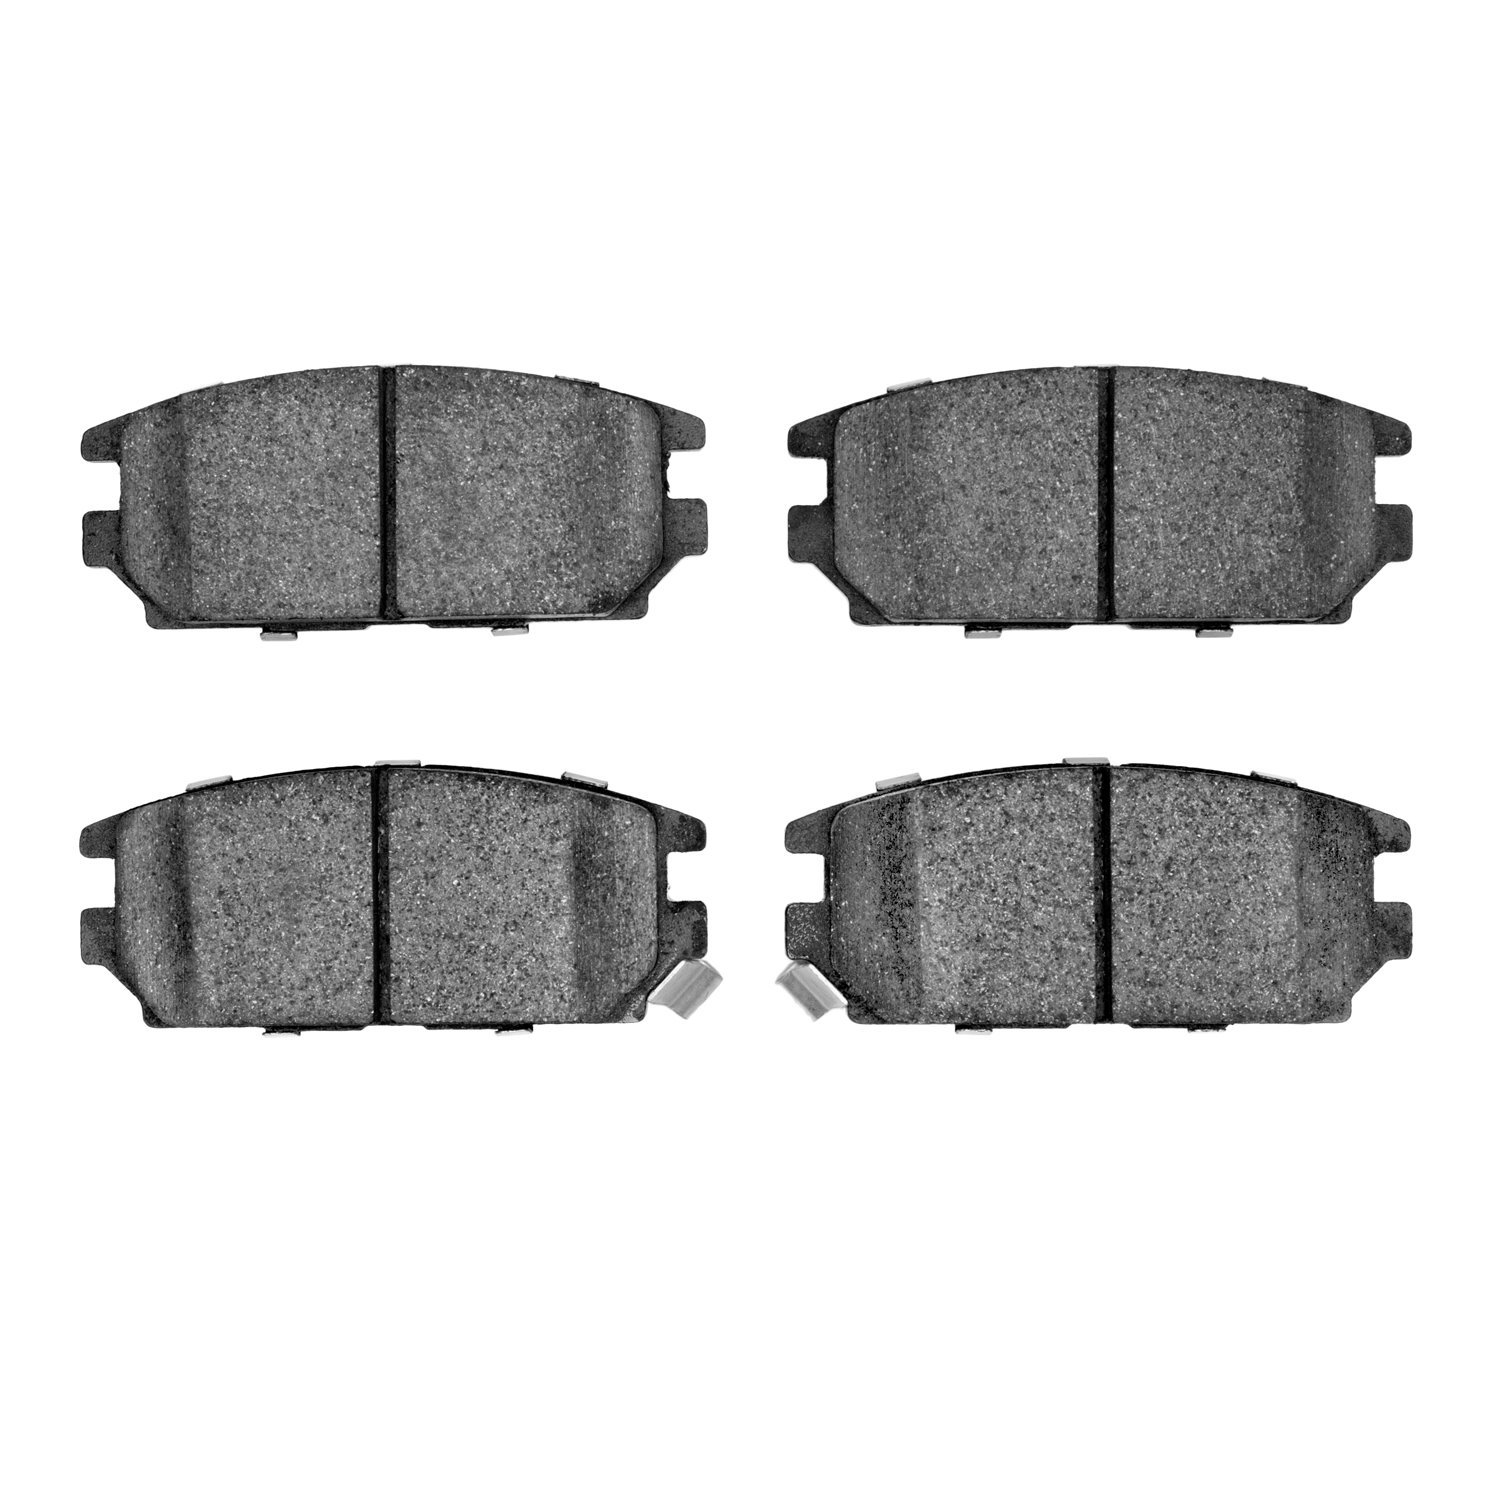 1551-0532-00 5000 Advanced Ceramic Brake Pads, 1991-2012 Multiple Makes/Models, Position: Rear